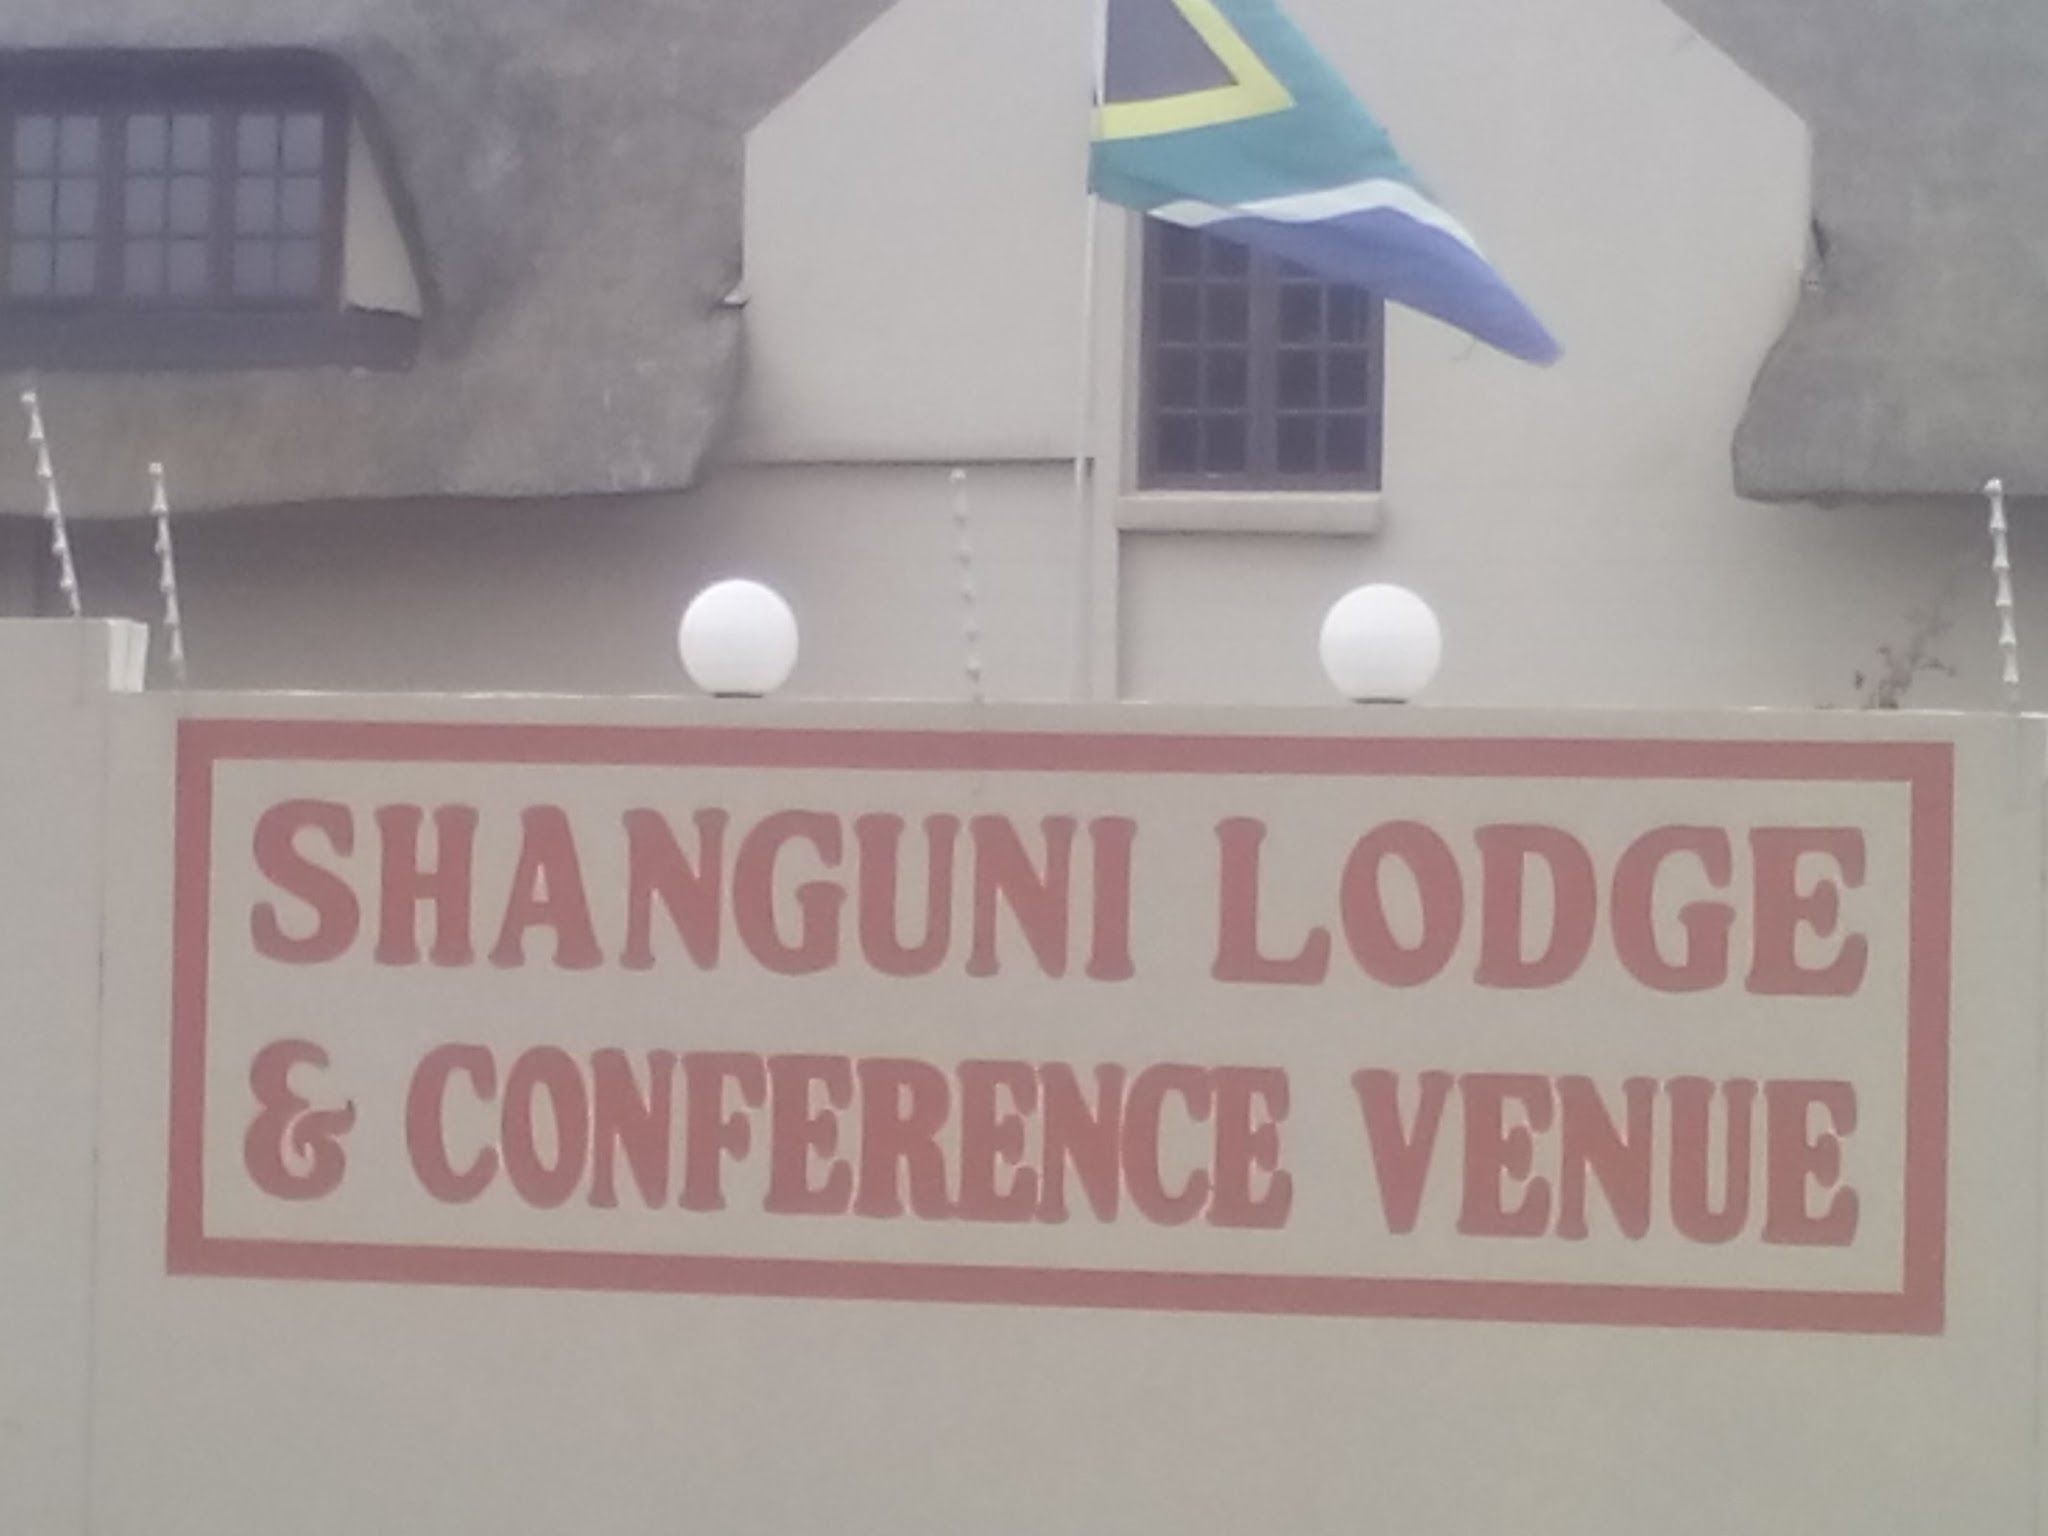 Shanguni Lodge Edenvale Johannesburg Gauteng South Africa Unsaturated, Sign, Window, Architecture